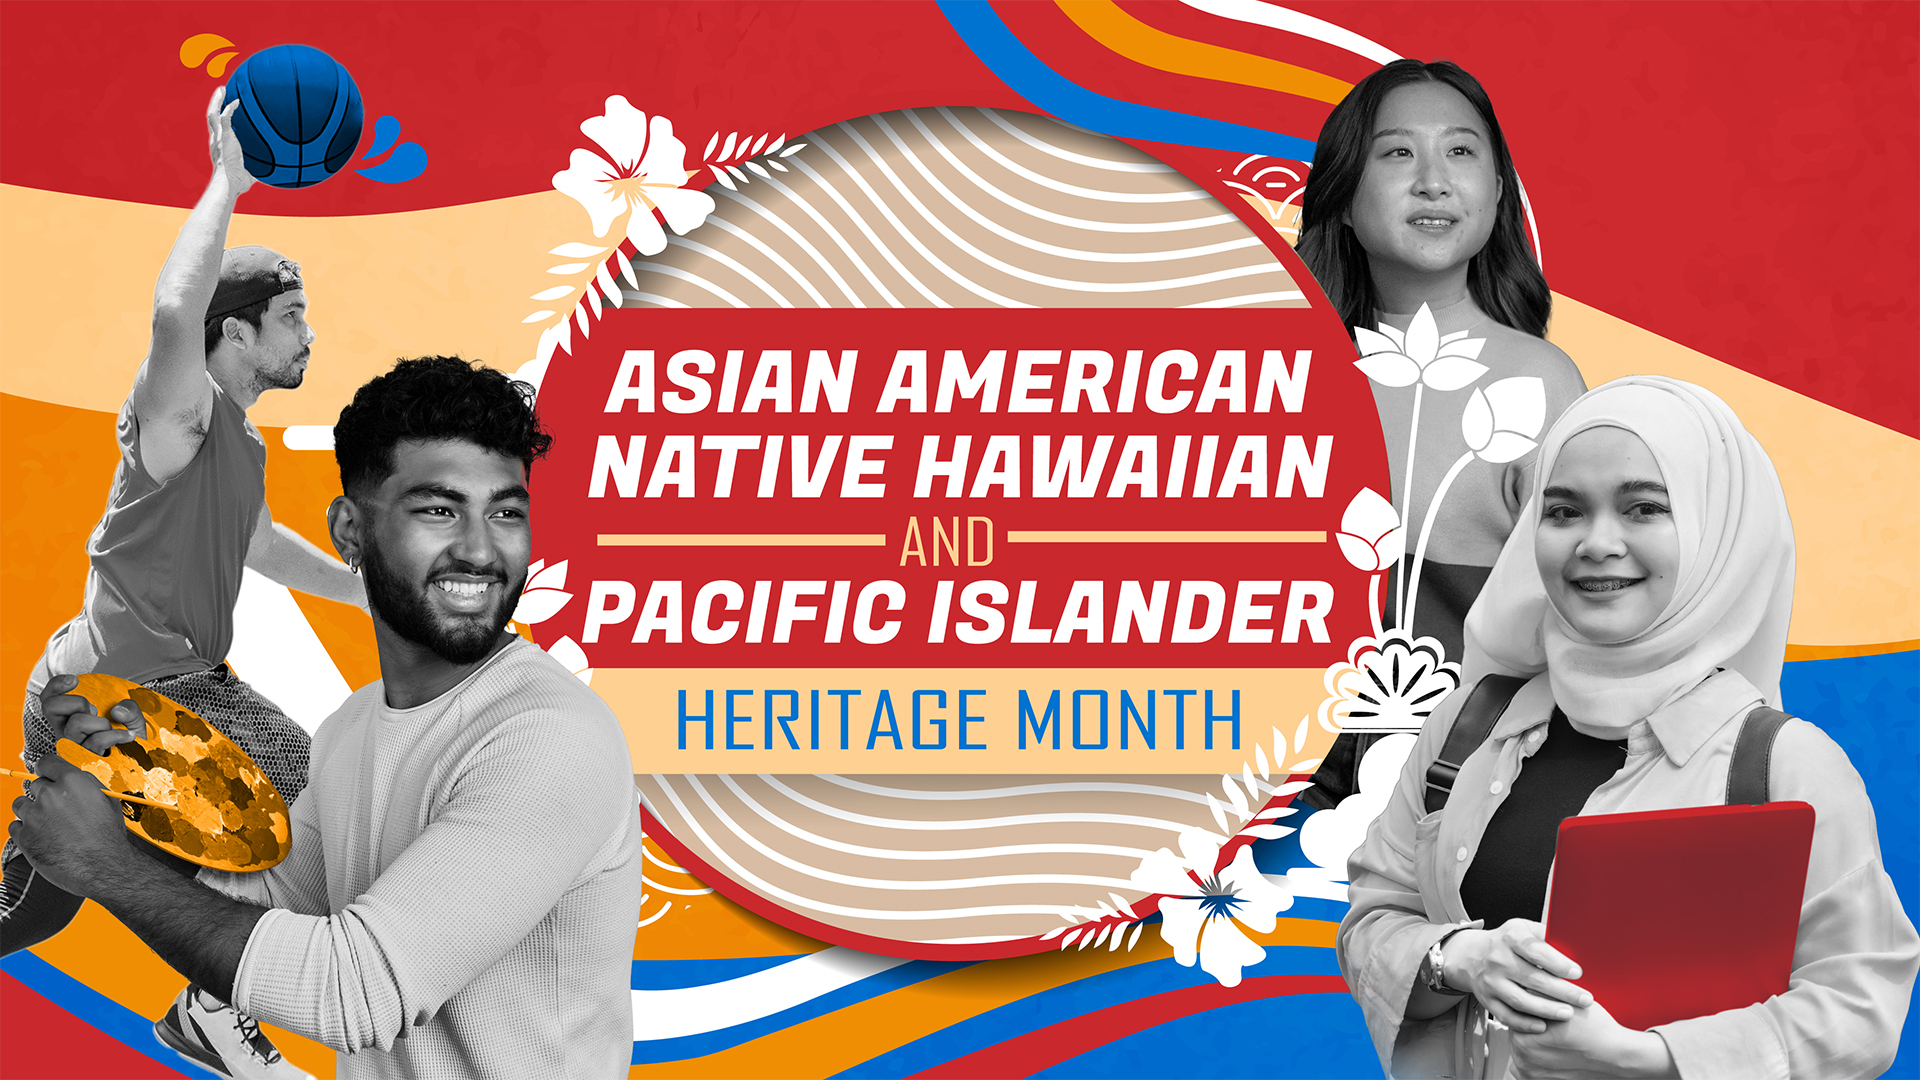 Asian American Heritage Month 1920 x 1080.jpg